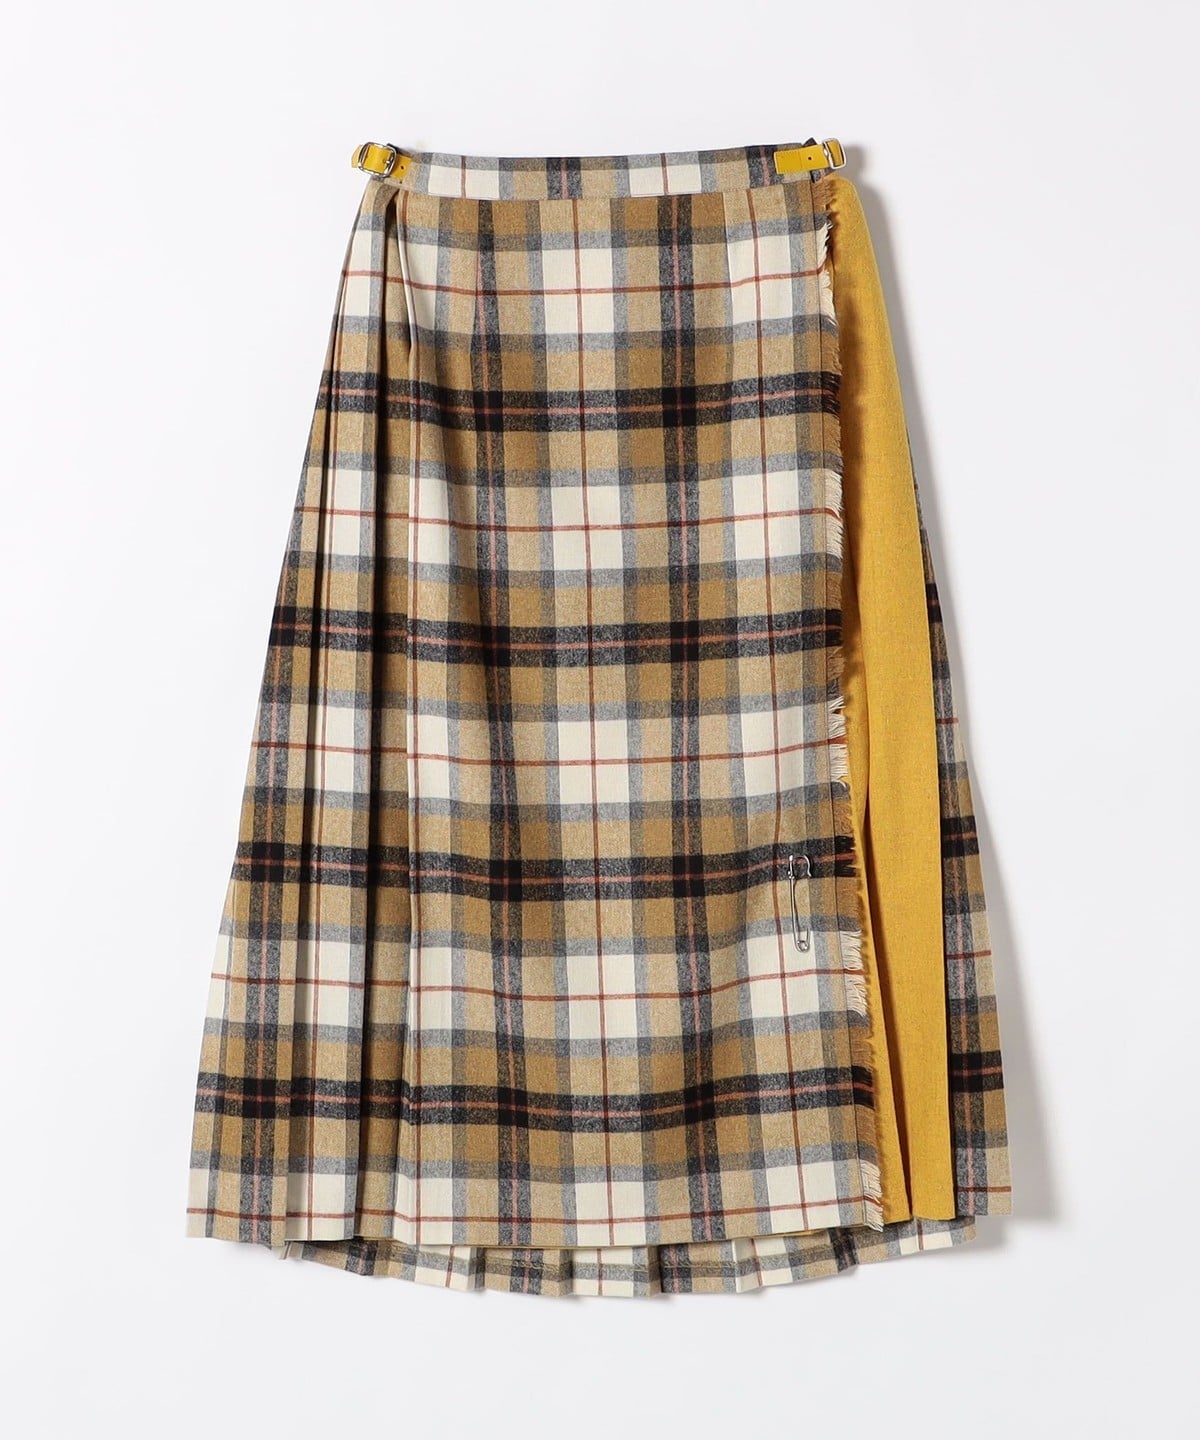 O'NEIL OF DUBLIN: コンビ キルト スカート 23AW (83cm): スカート